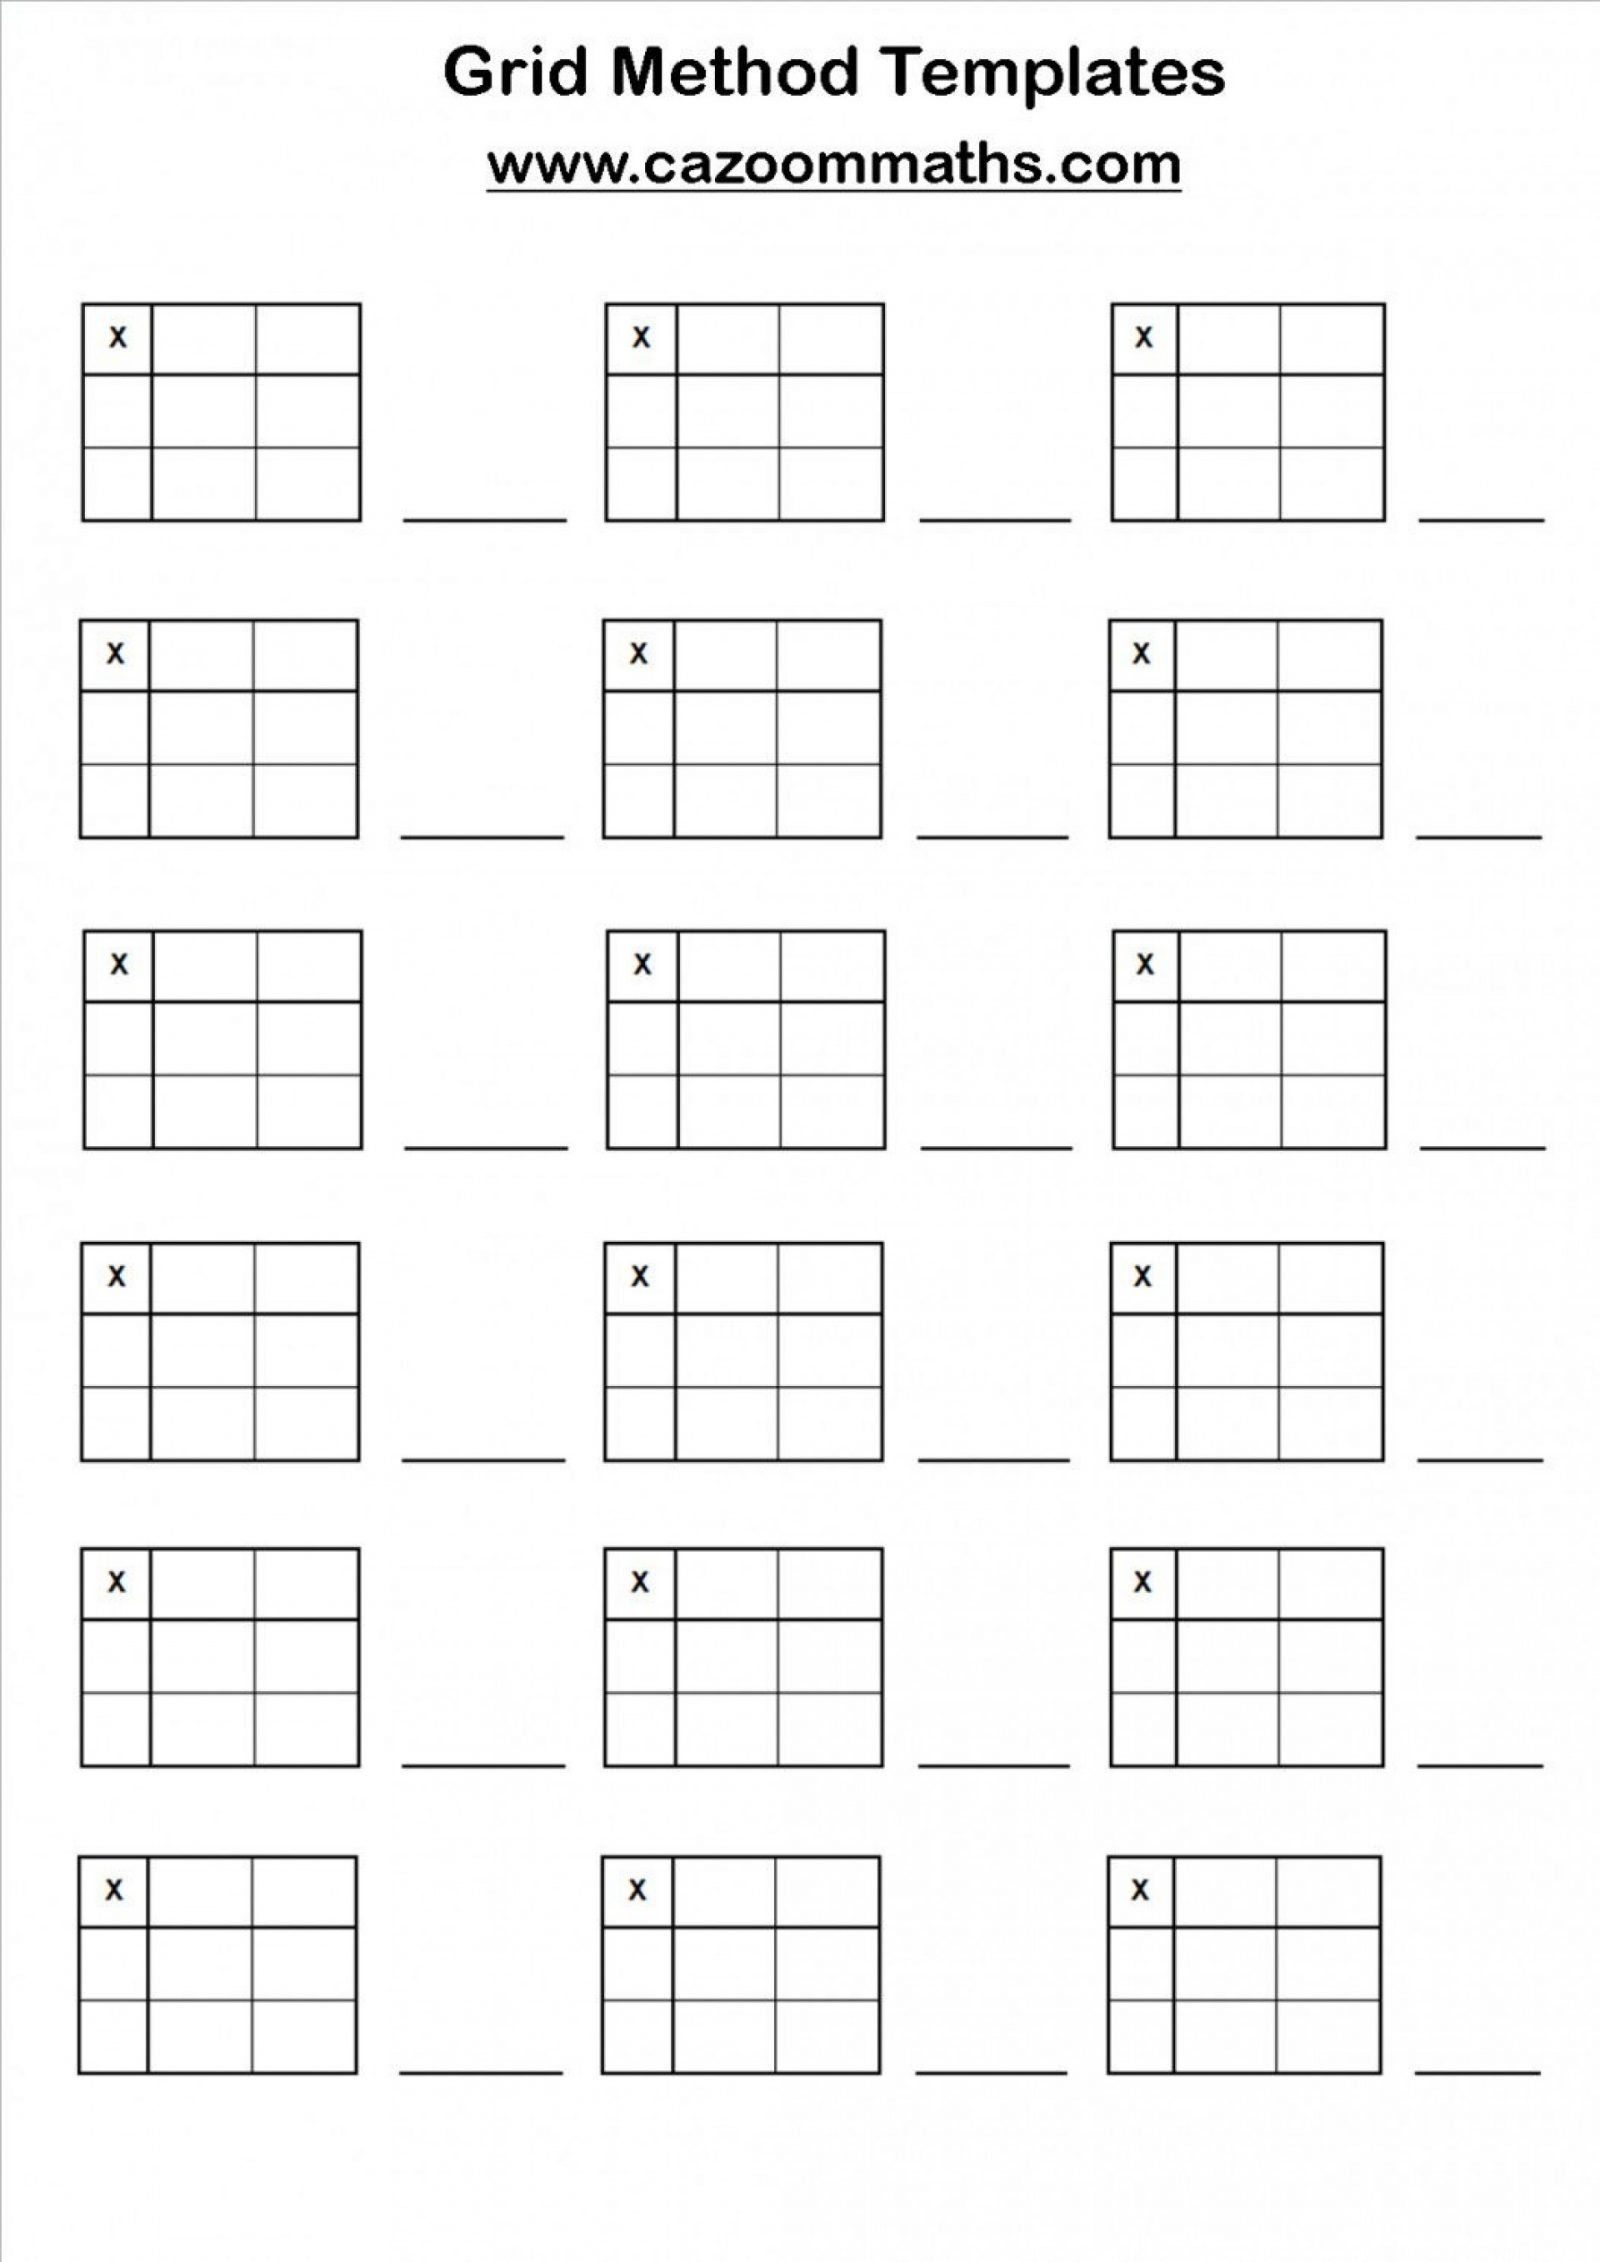  multiplication worksheets ks2 Printable Lexias Blog multiplication worksheets ks2 Printable 